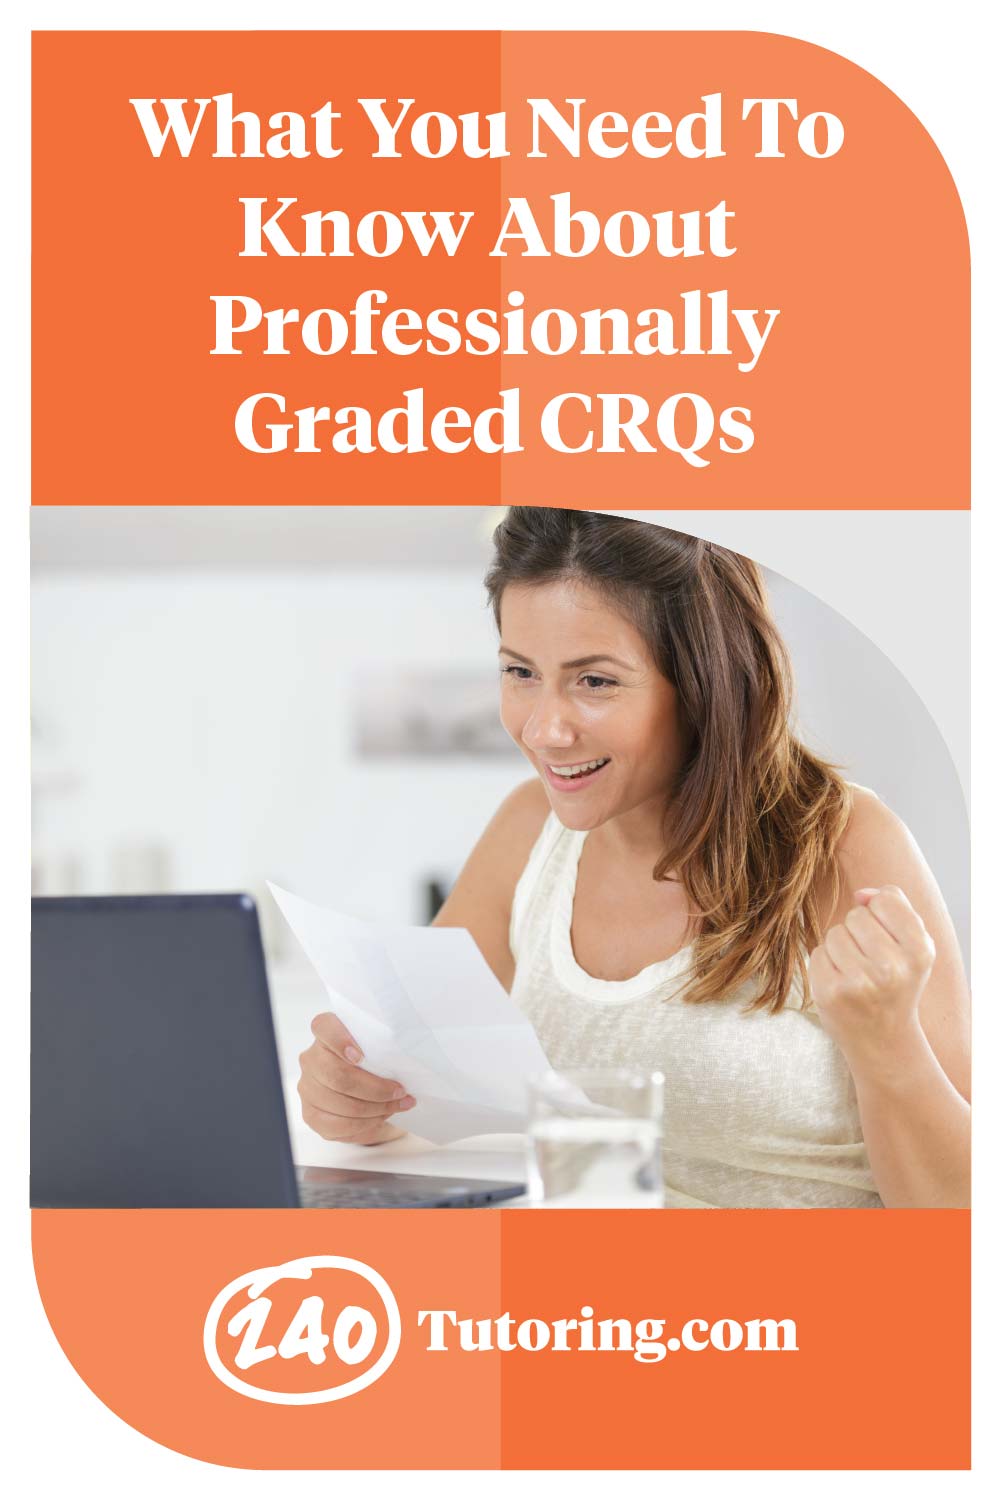 Professionally Graded CRQs